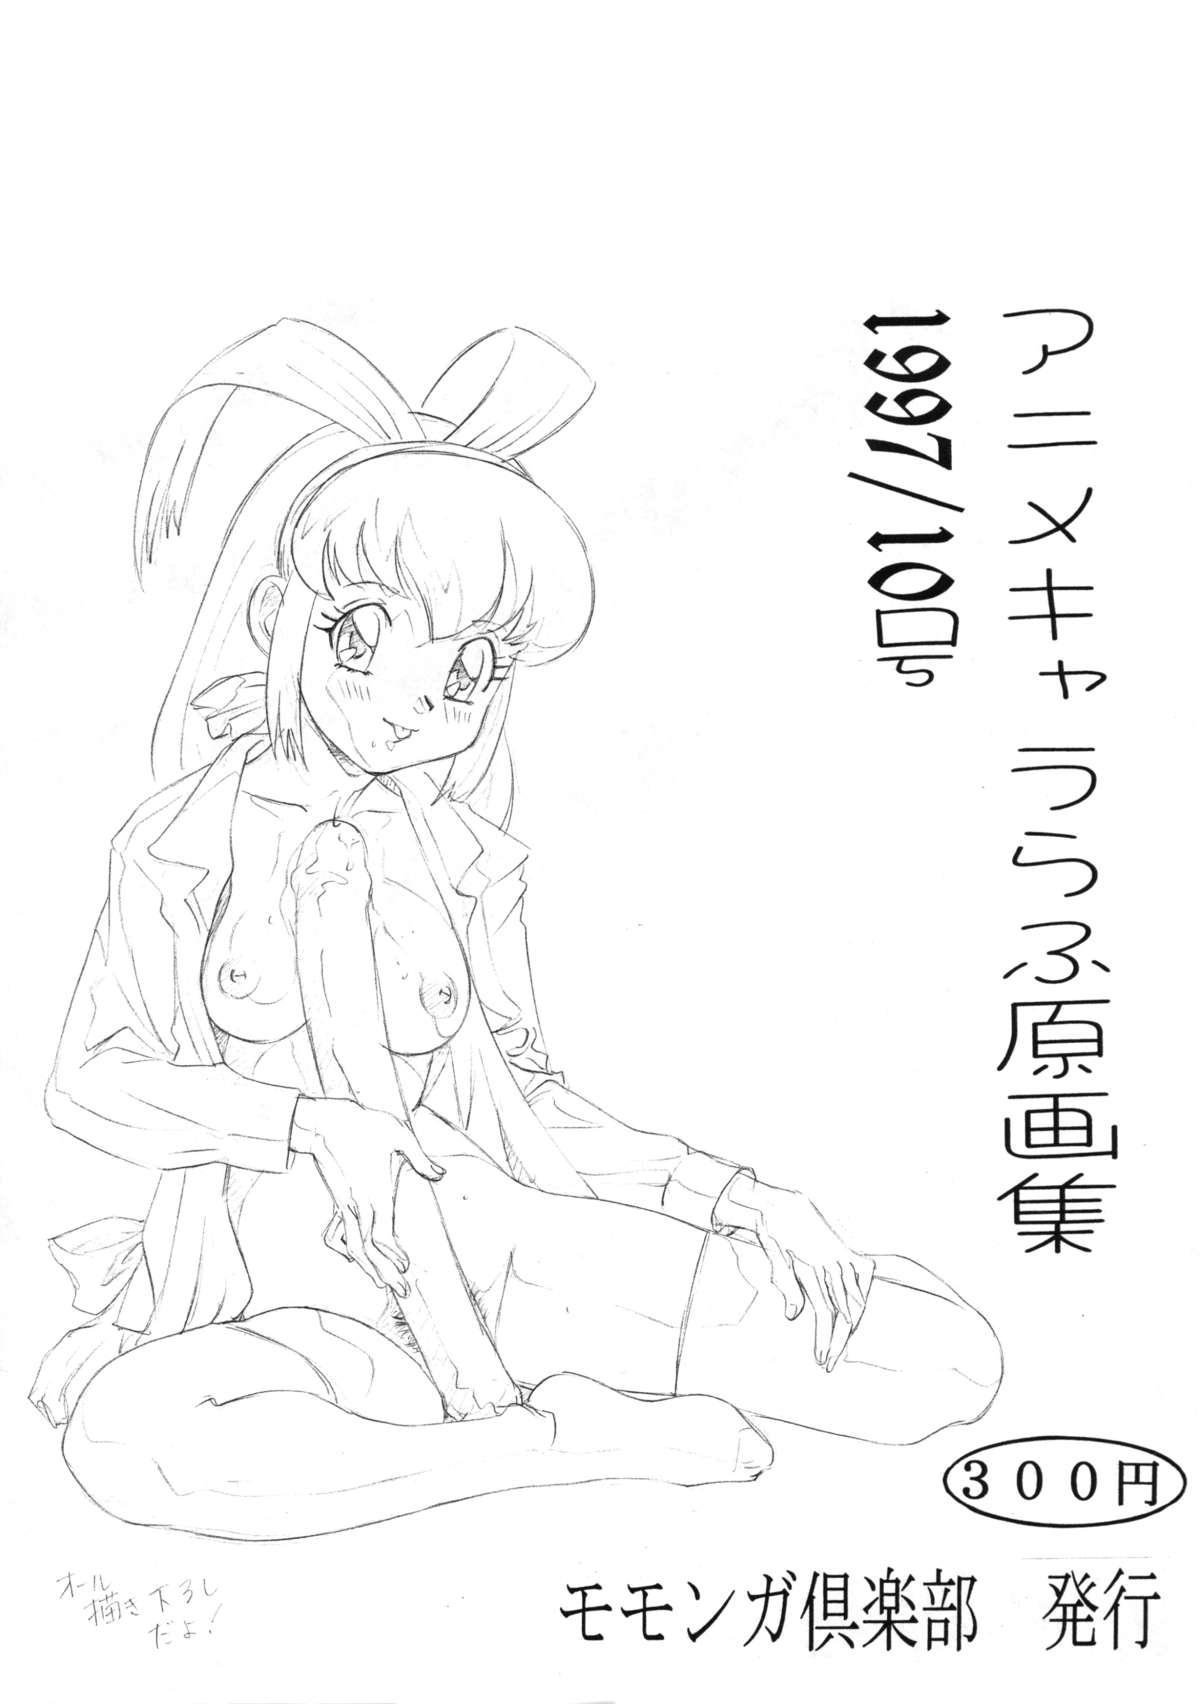 Abg Anime Kyararafu Original Collection 1997/10 Issue - Urusei yatsura Teenpussy - Picture 1